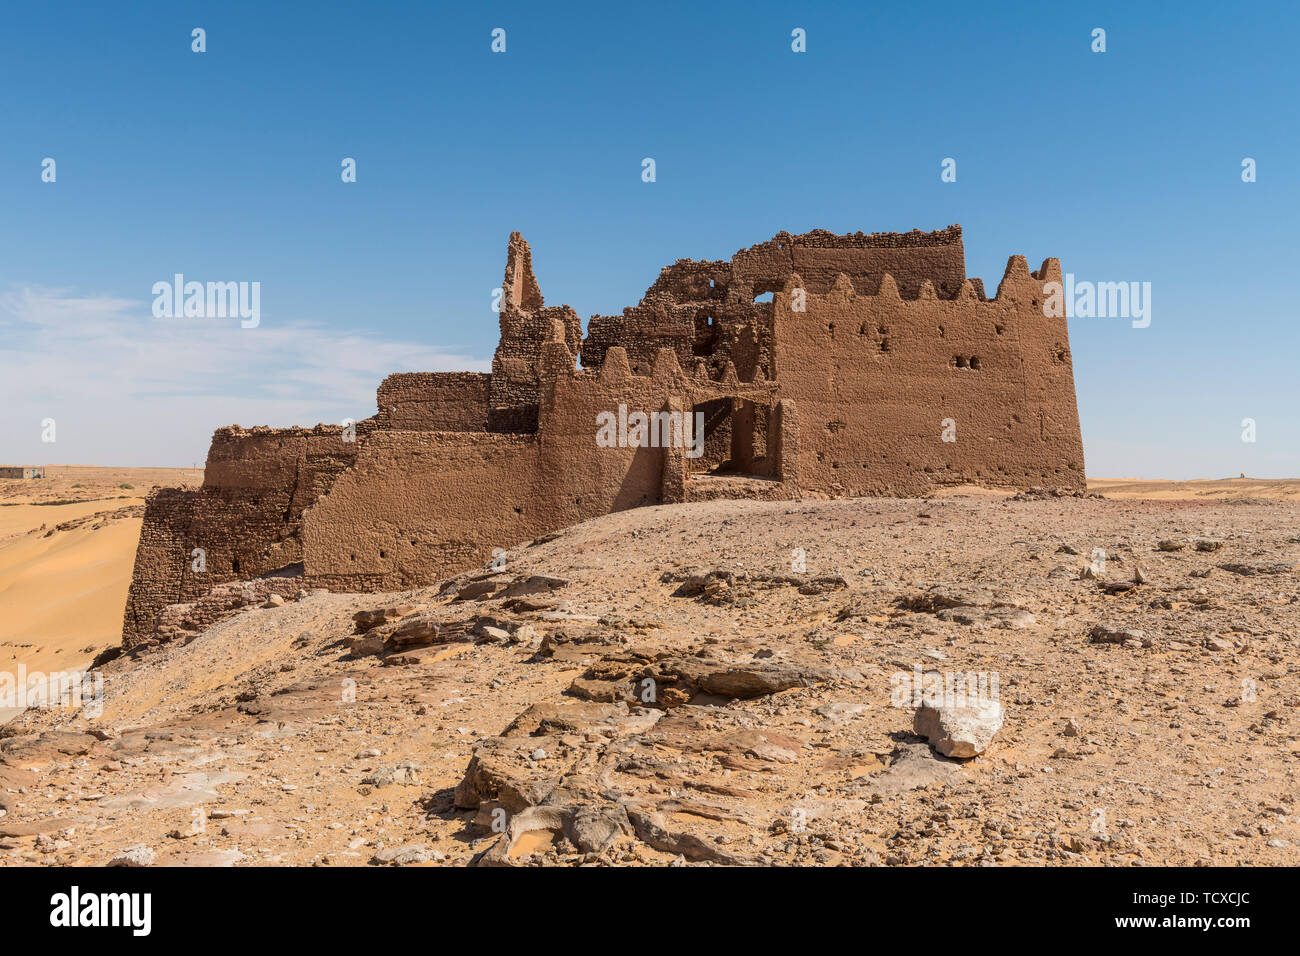 Old ksar, old town in the desert, near Timimoun, western Algeria, North Africa, Africa Stock Photo